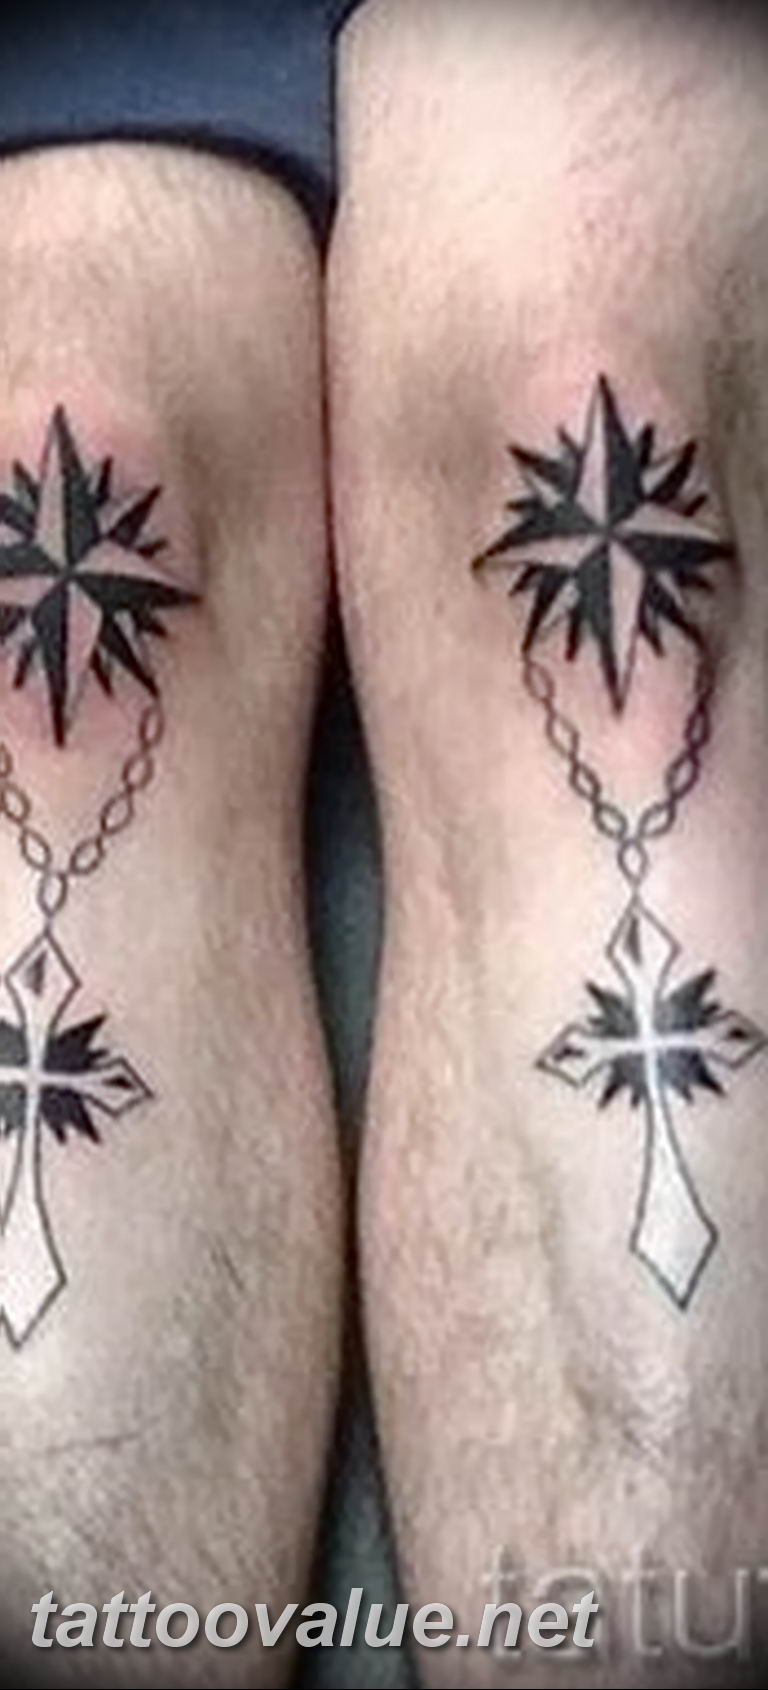 photo star tattoo on his knee 04012019 033  photo tattoo ideas   tattoovaluenet  tattoovaluenet